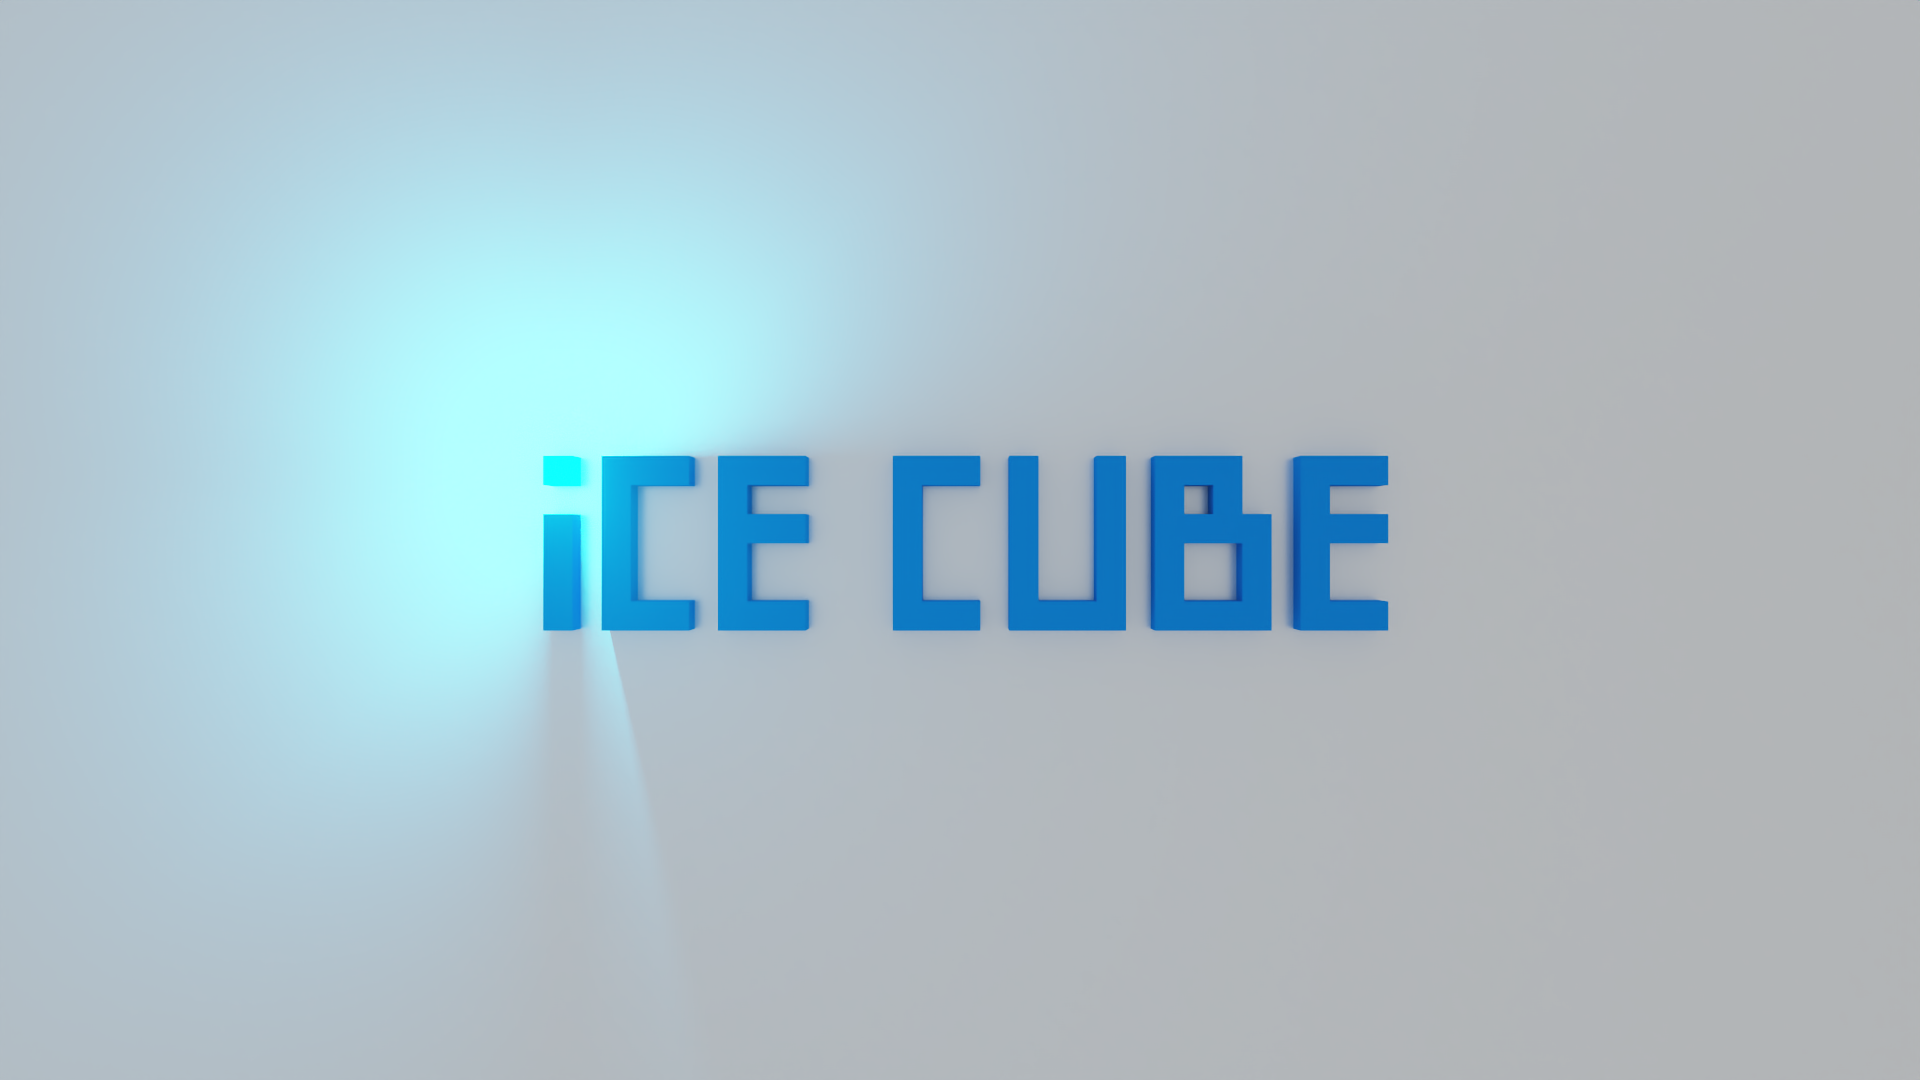 icecube.png